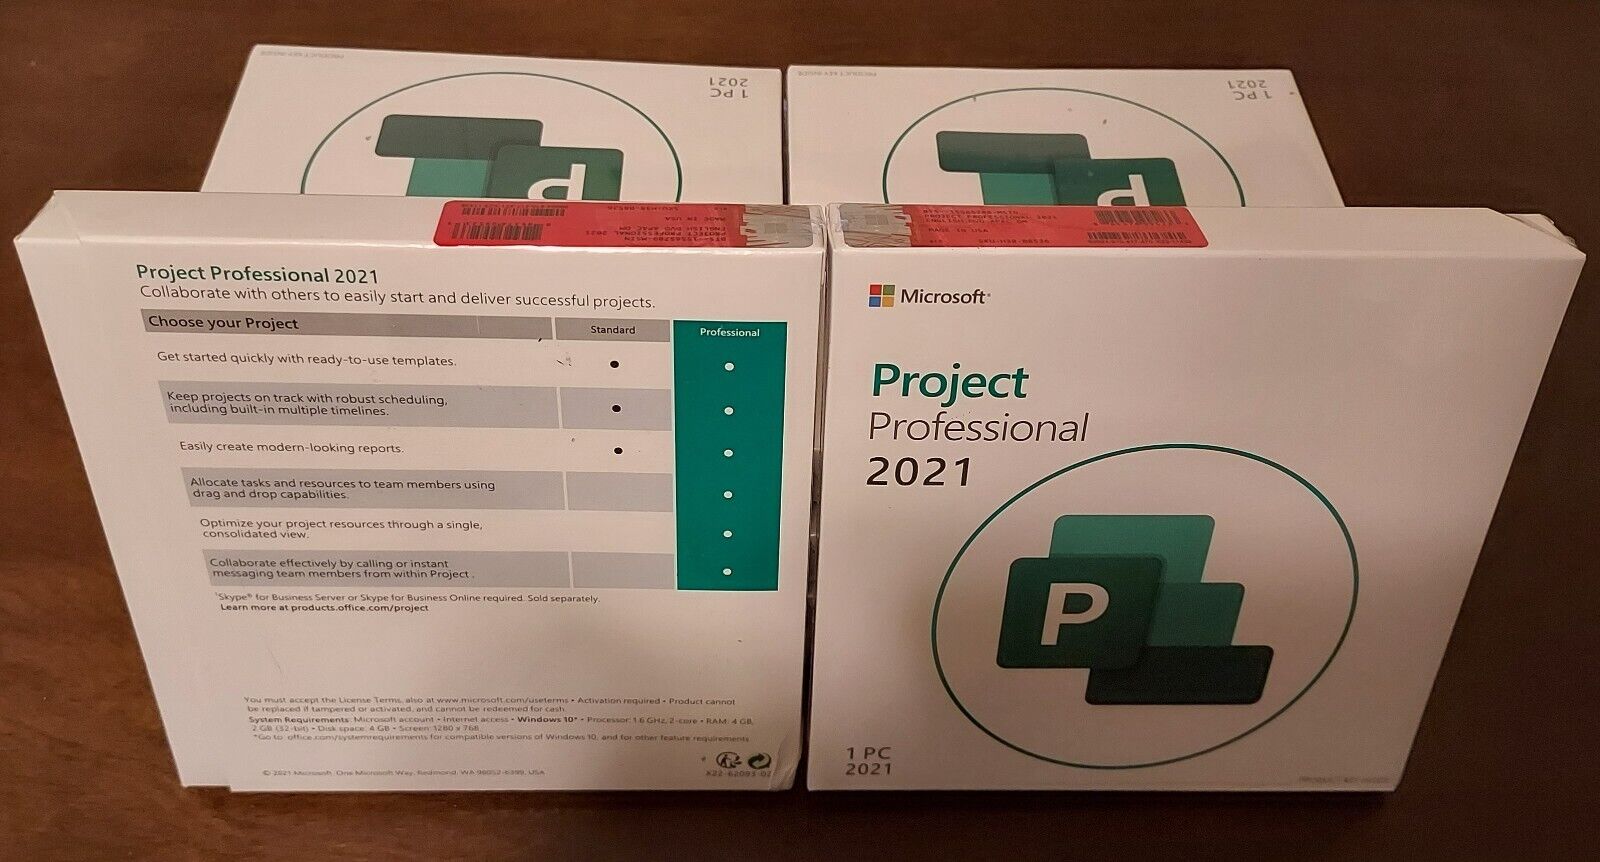 Microsoft Project 2021 Professional - Retail Box - New